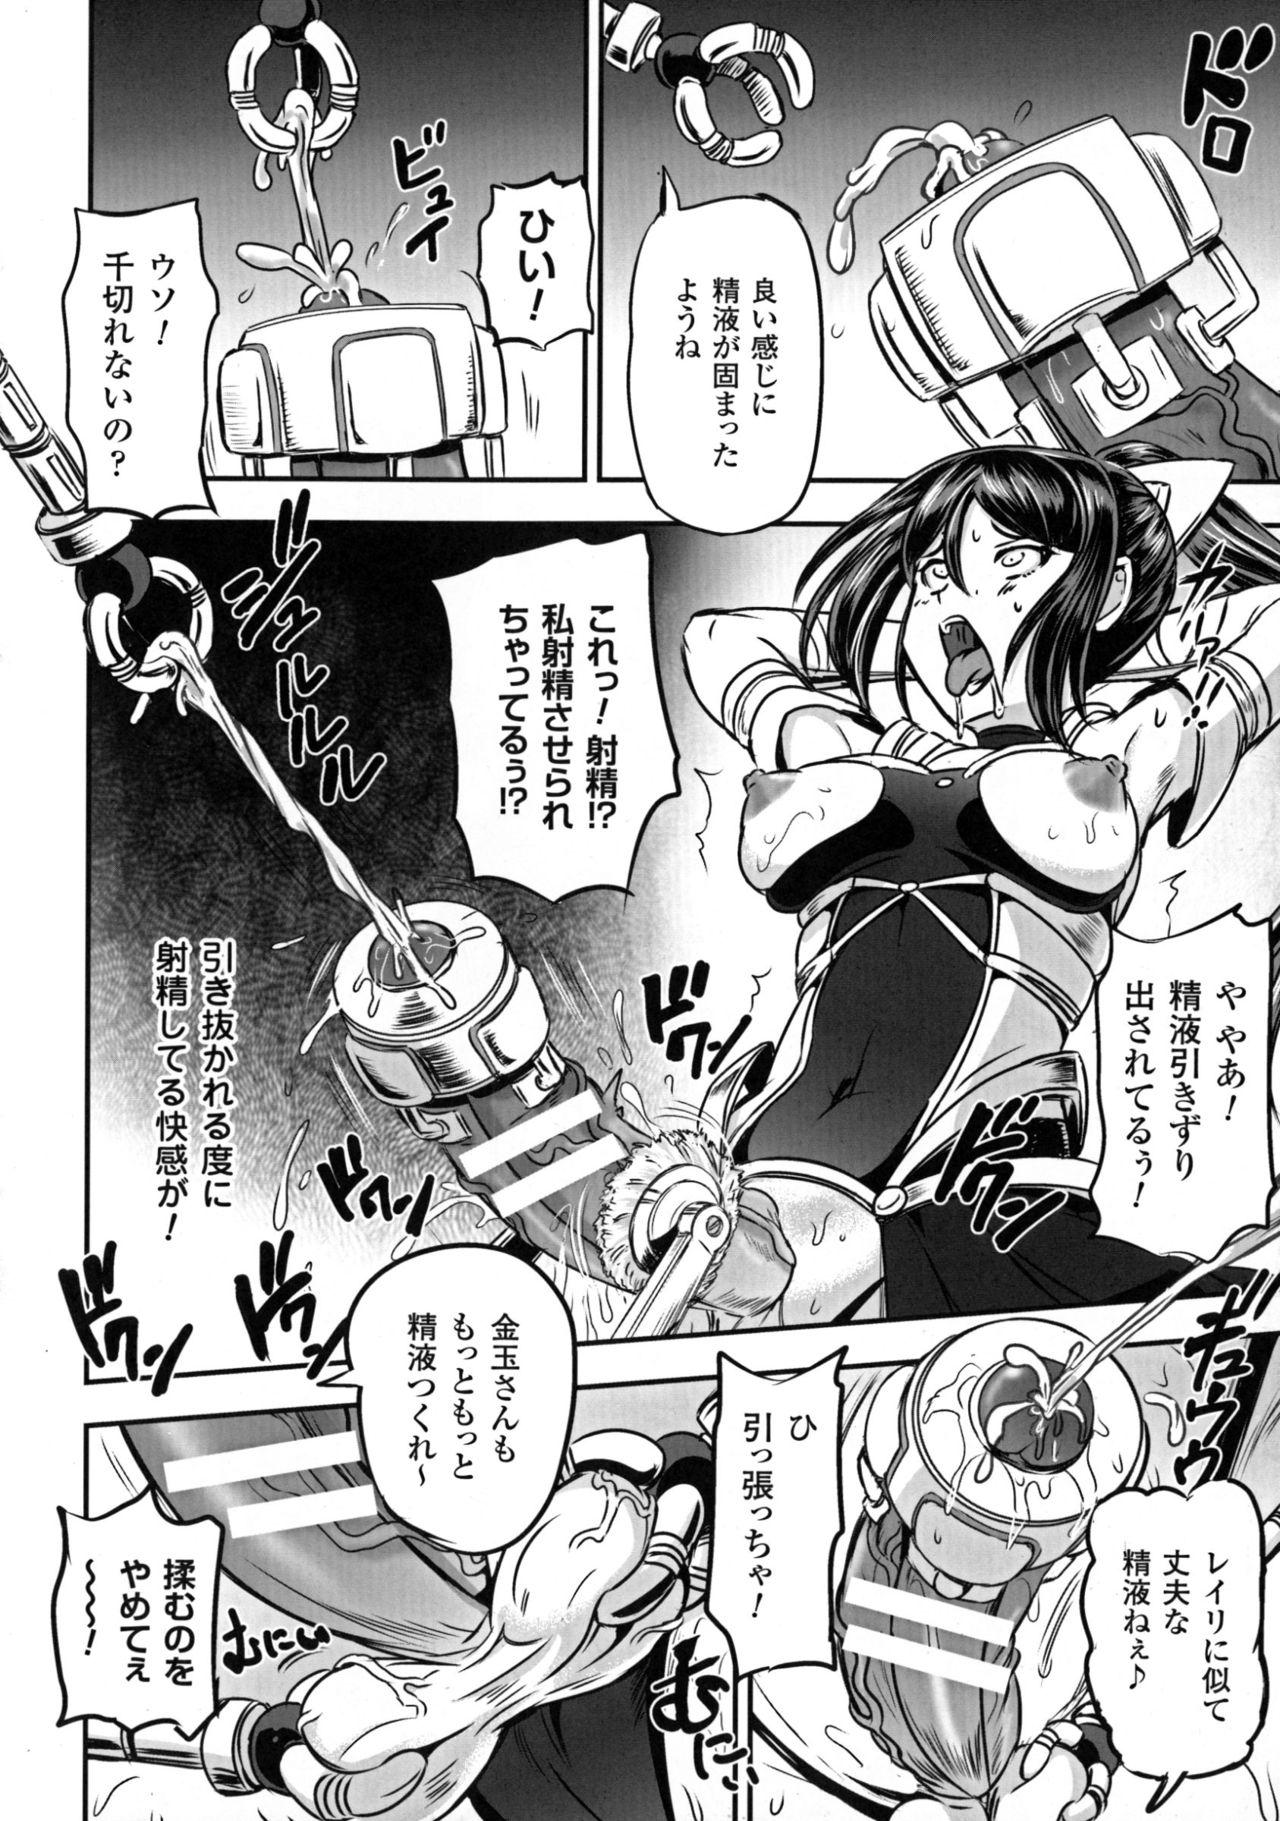 Seigi no Heroine Kangoku File DX vol. 5 153